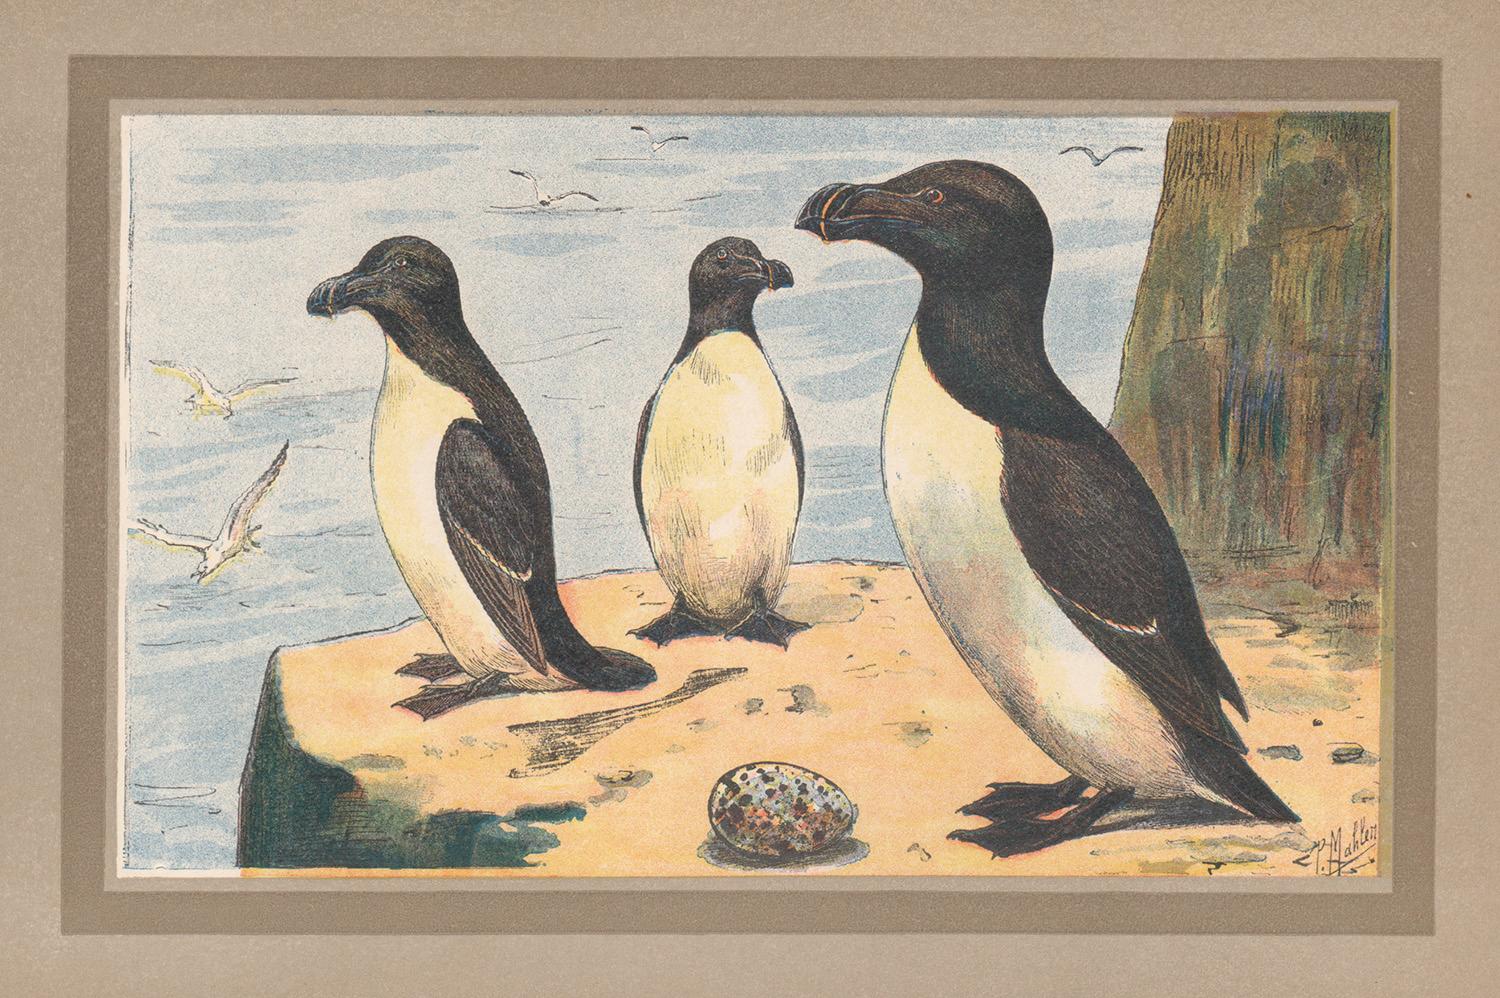 Razorbill Auk, French antique natural history sea bird art illustration print